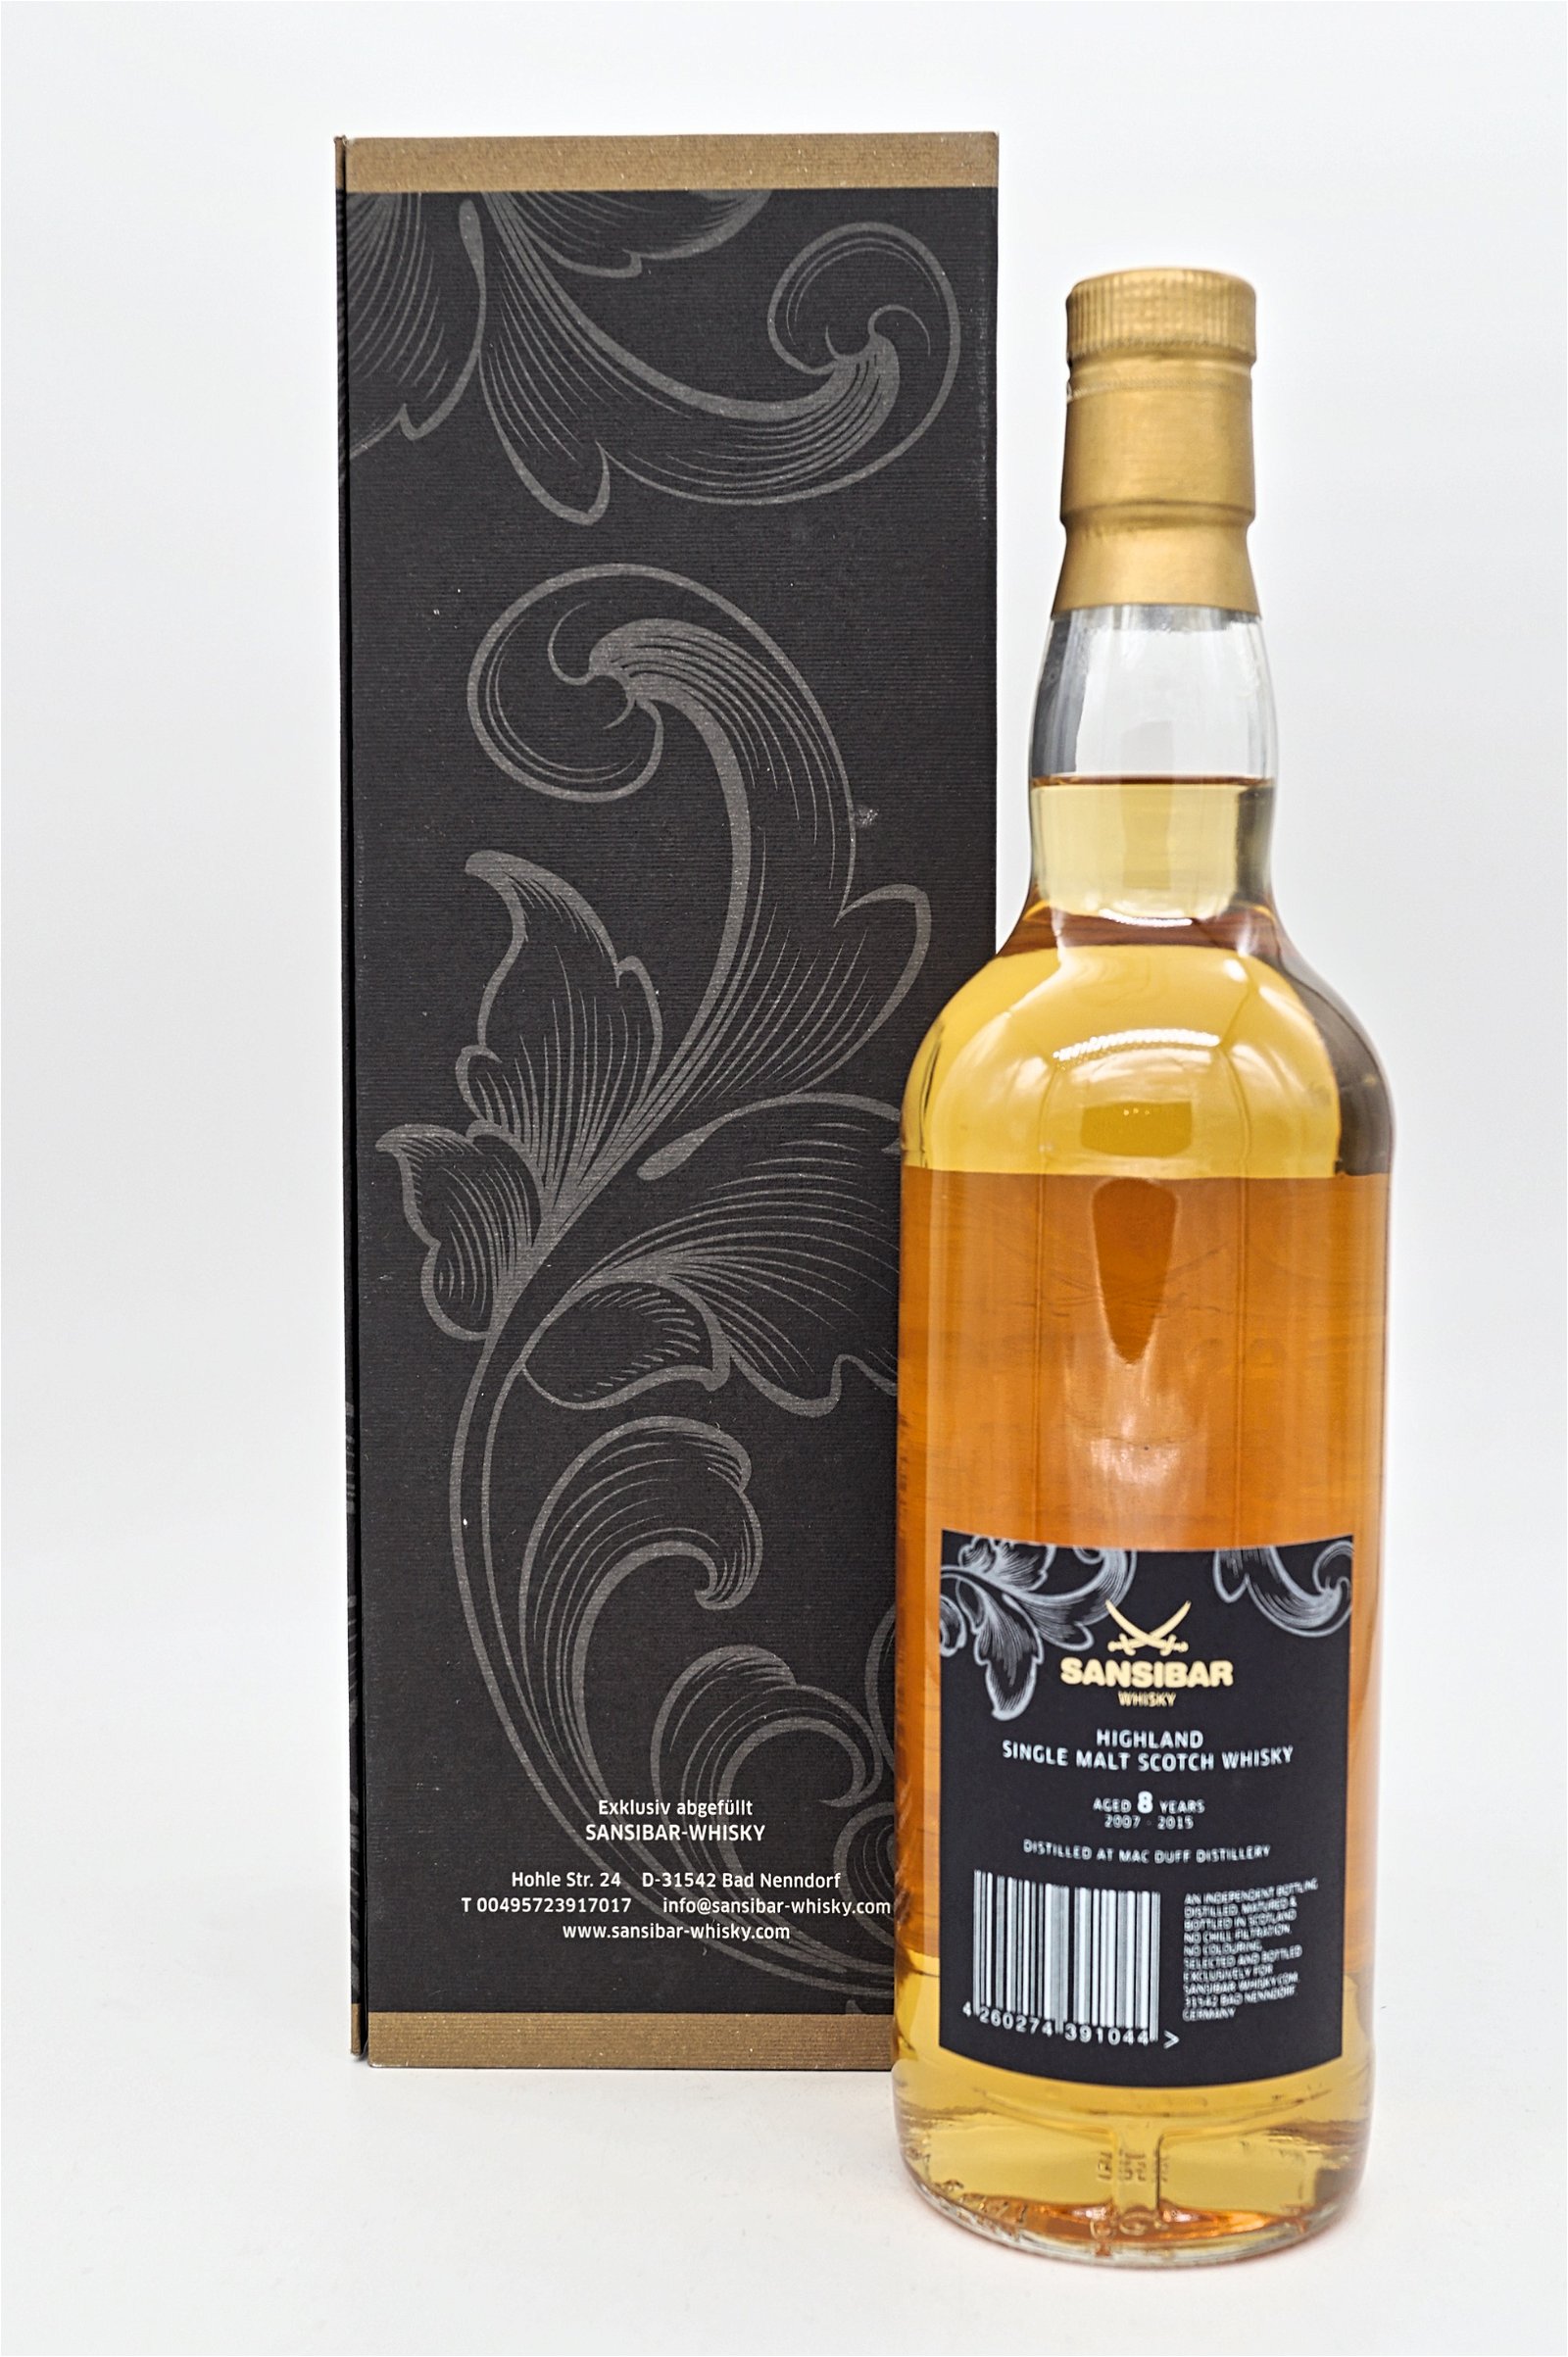 Sansibar Whisky 8 Jahre Macduff Distillery 2007/2015 Limited Edition Single Cask Single Malt Scotch Whisky